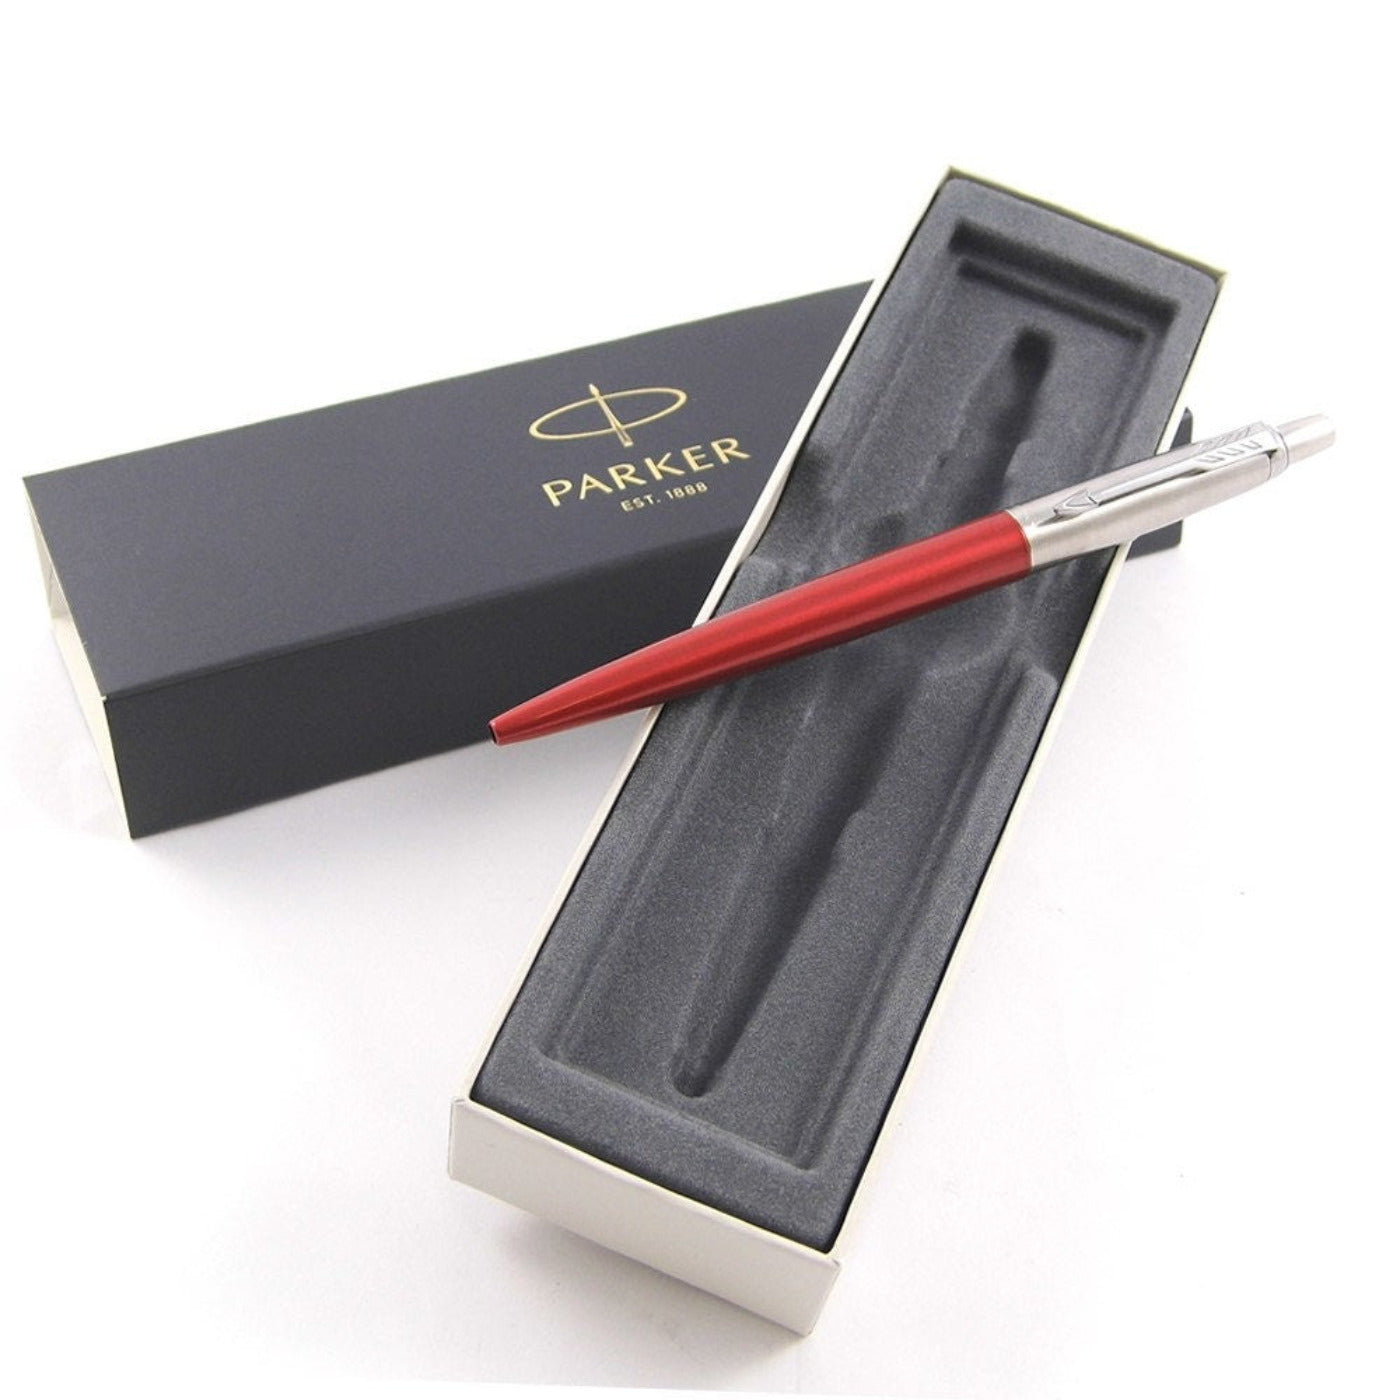 Personalised, Engraved Pen - Parker Kensington Red Jotter Pen